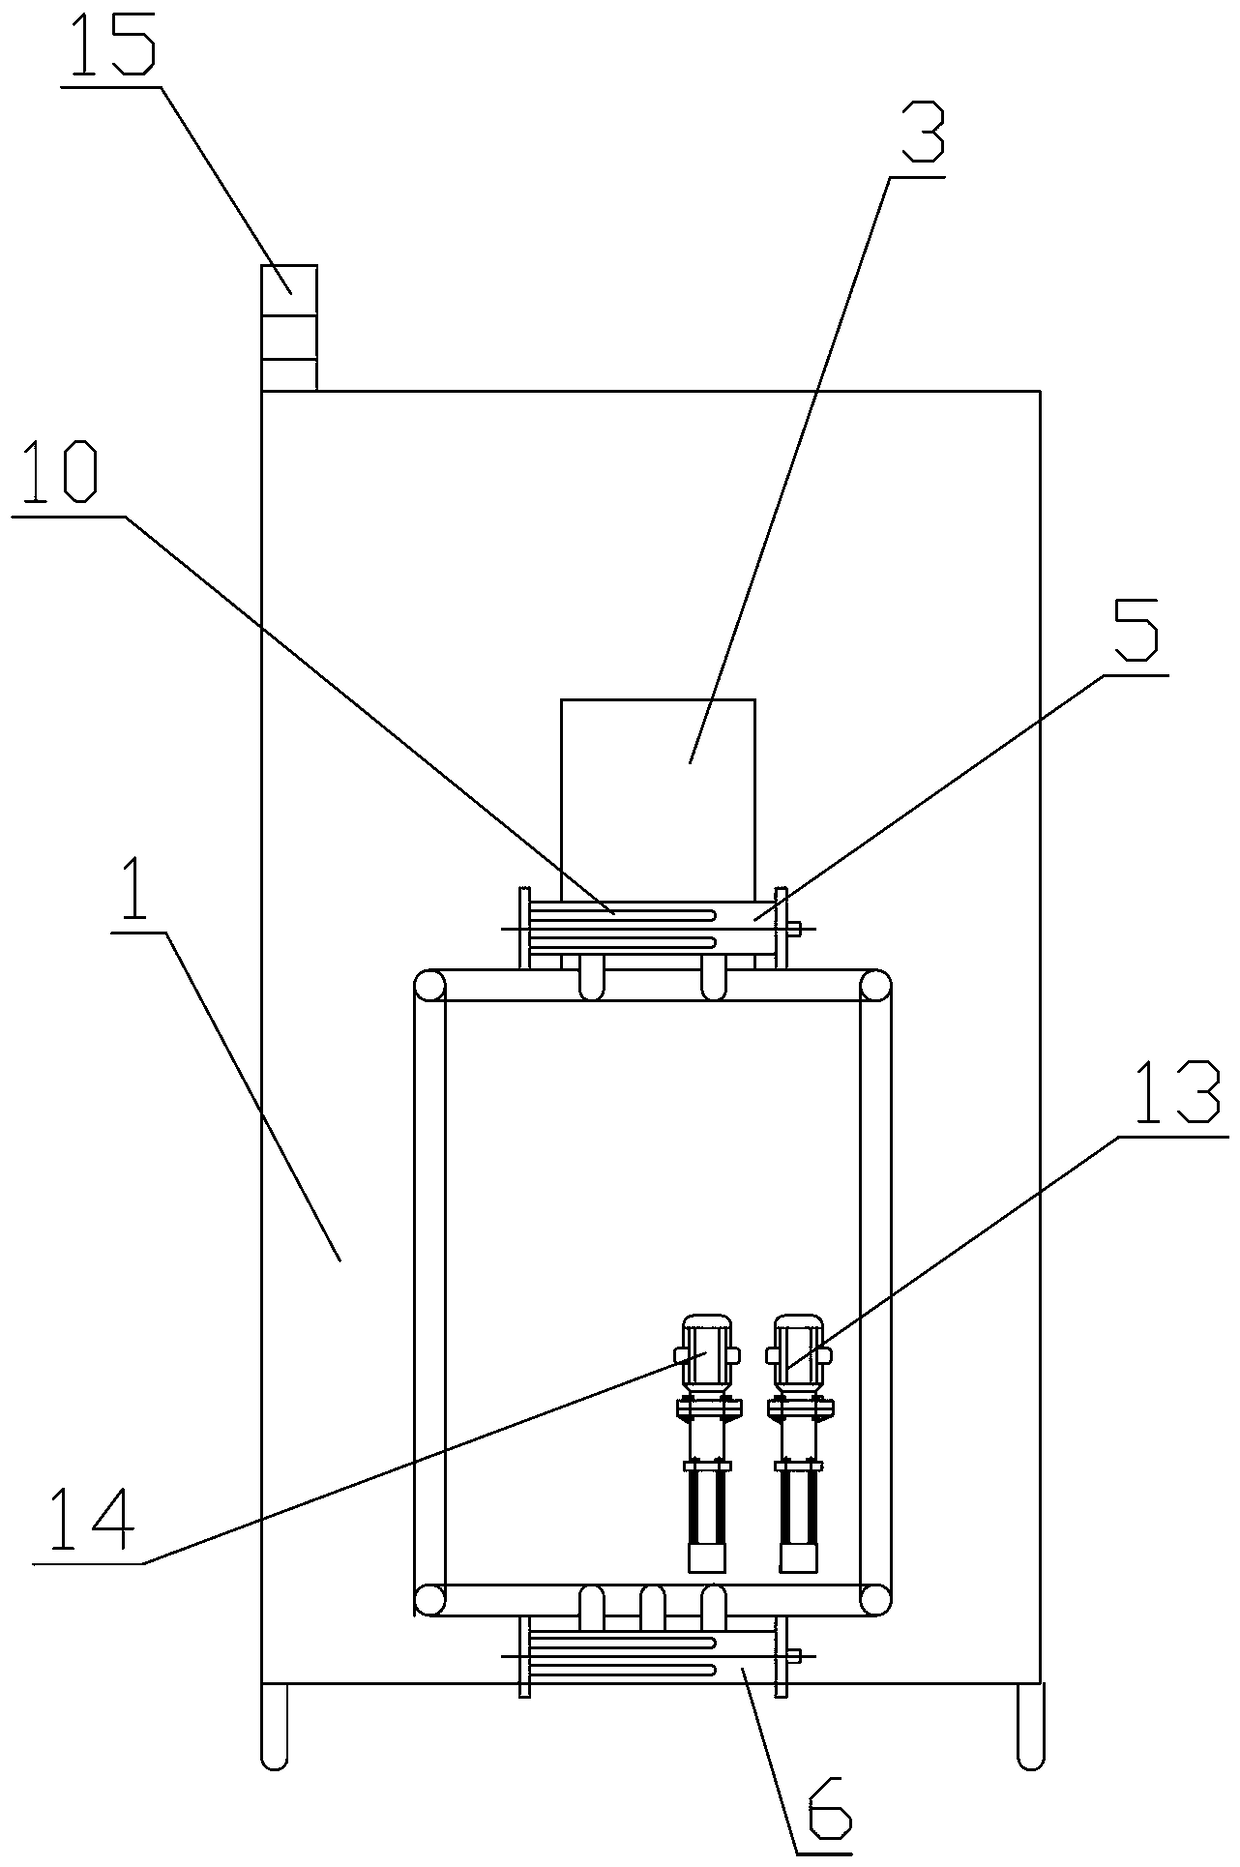 Column-hanging type multifunctional heat conducting fort